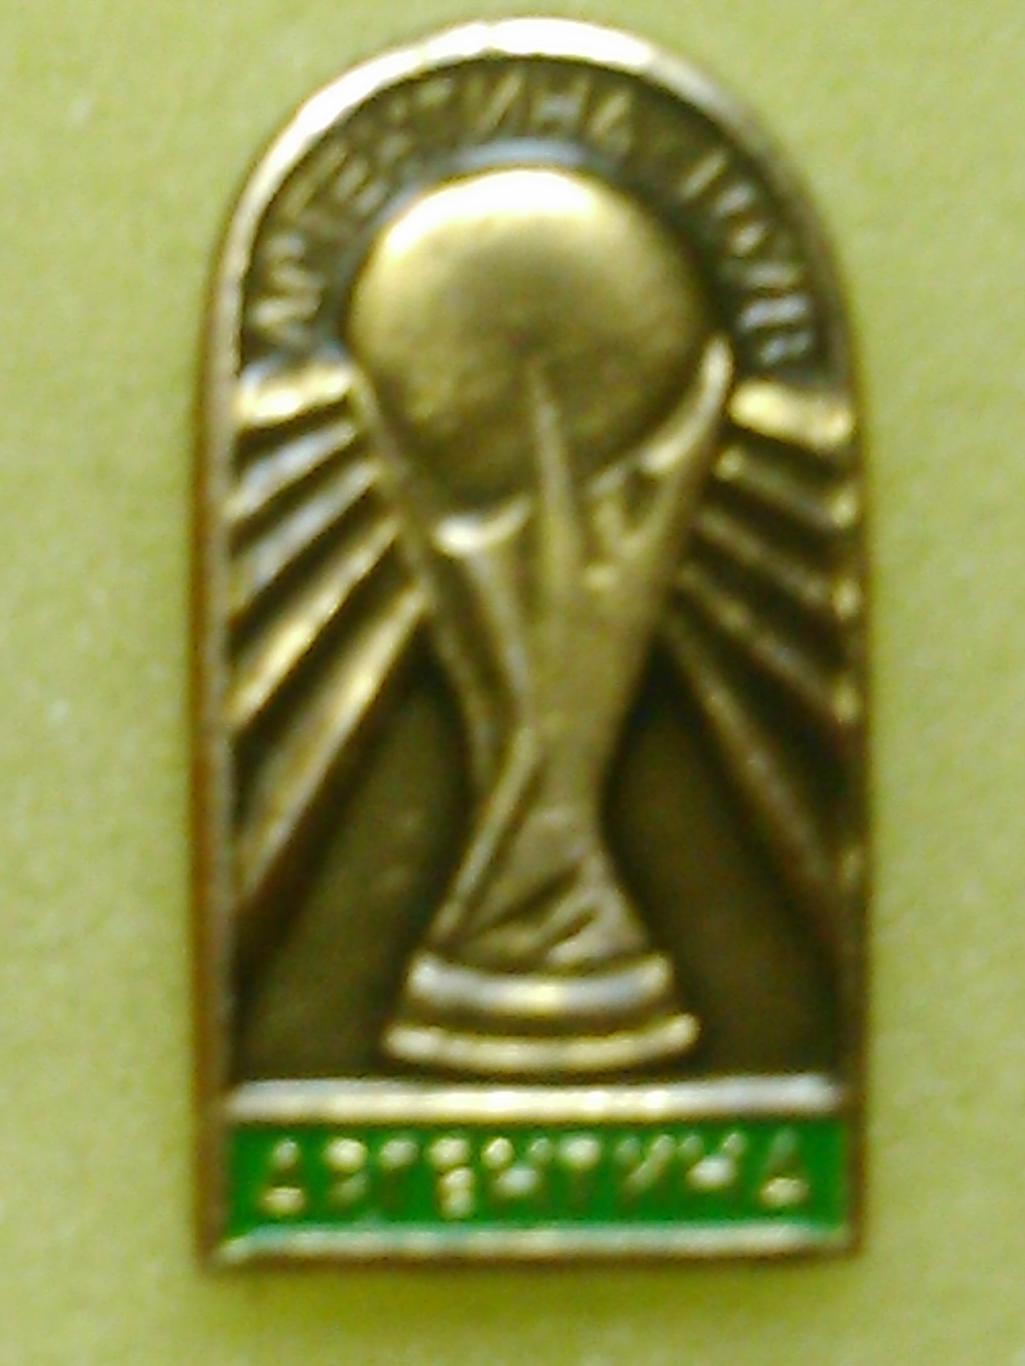 Футбольн. знак. Чемпион мира 1986. Аргентина. Footbal Badge. Оптом скидки до 46%